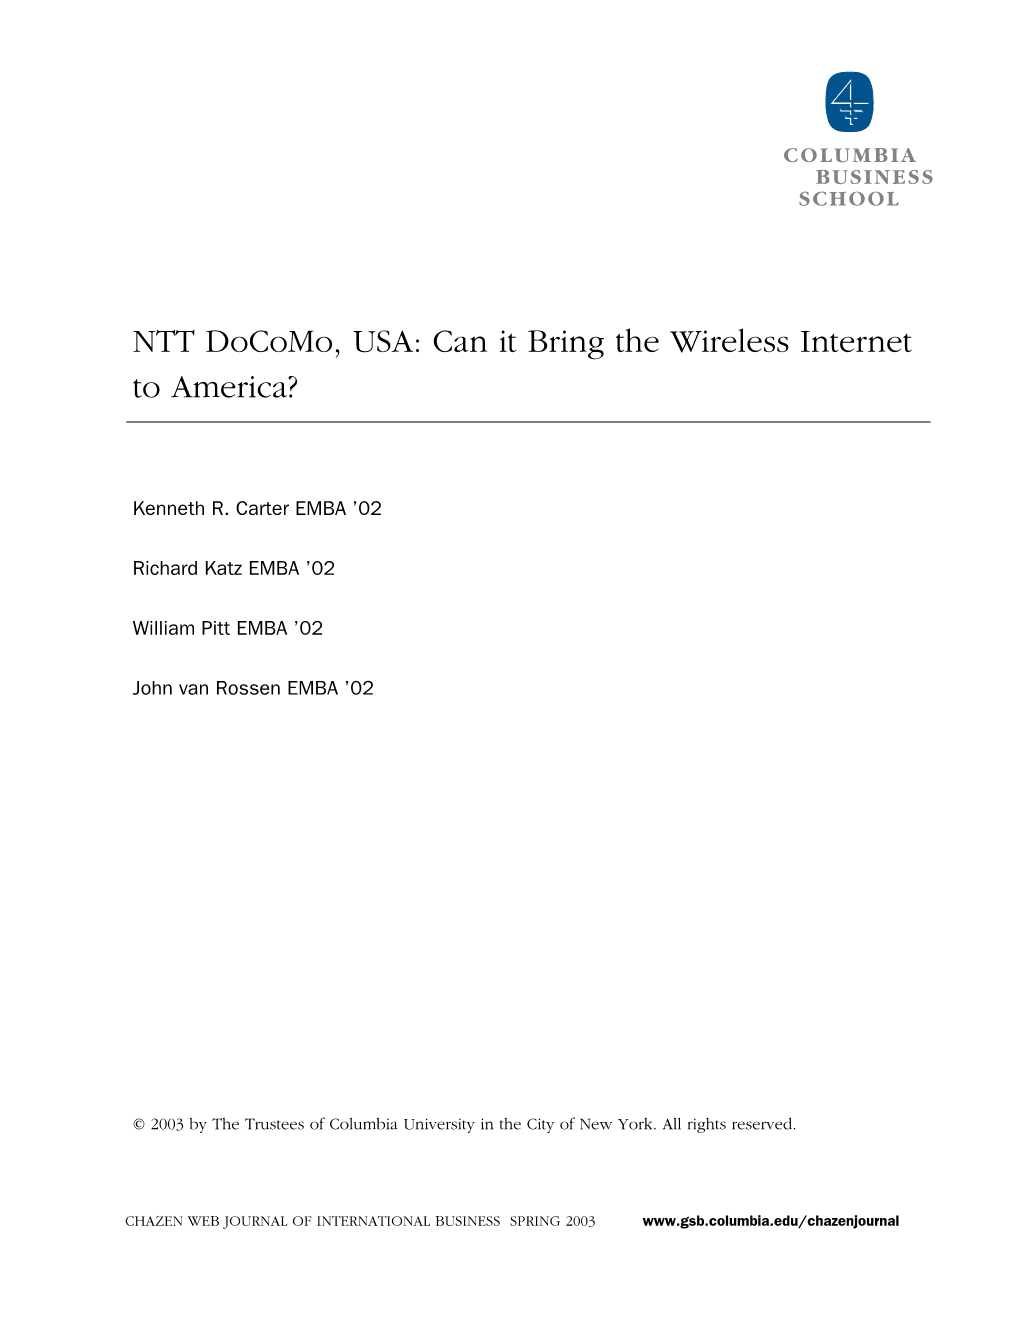 NTT Docomo, USA: Can It Bring the Wireless Internet to America?